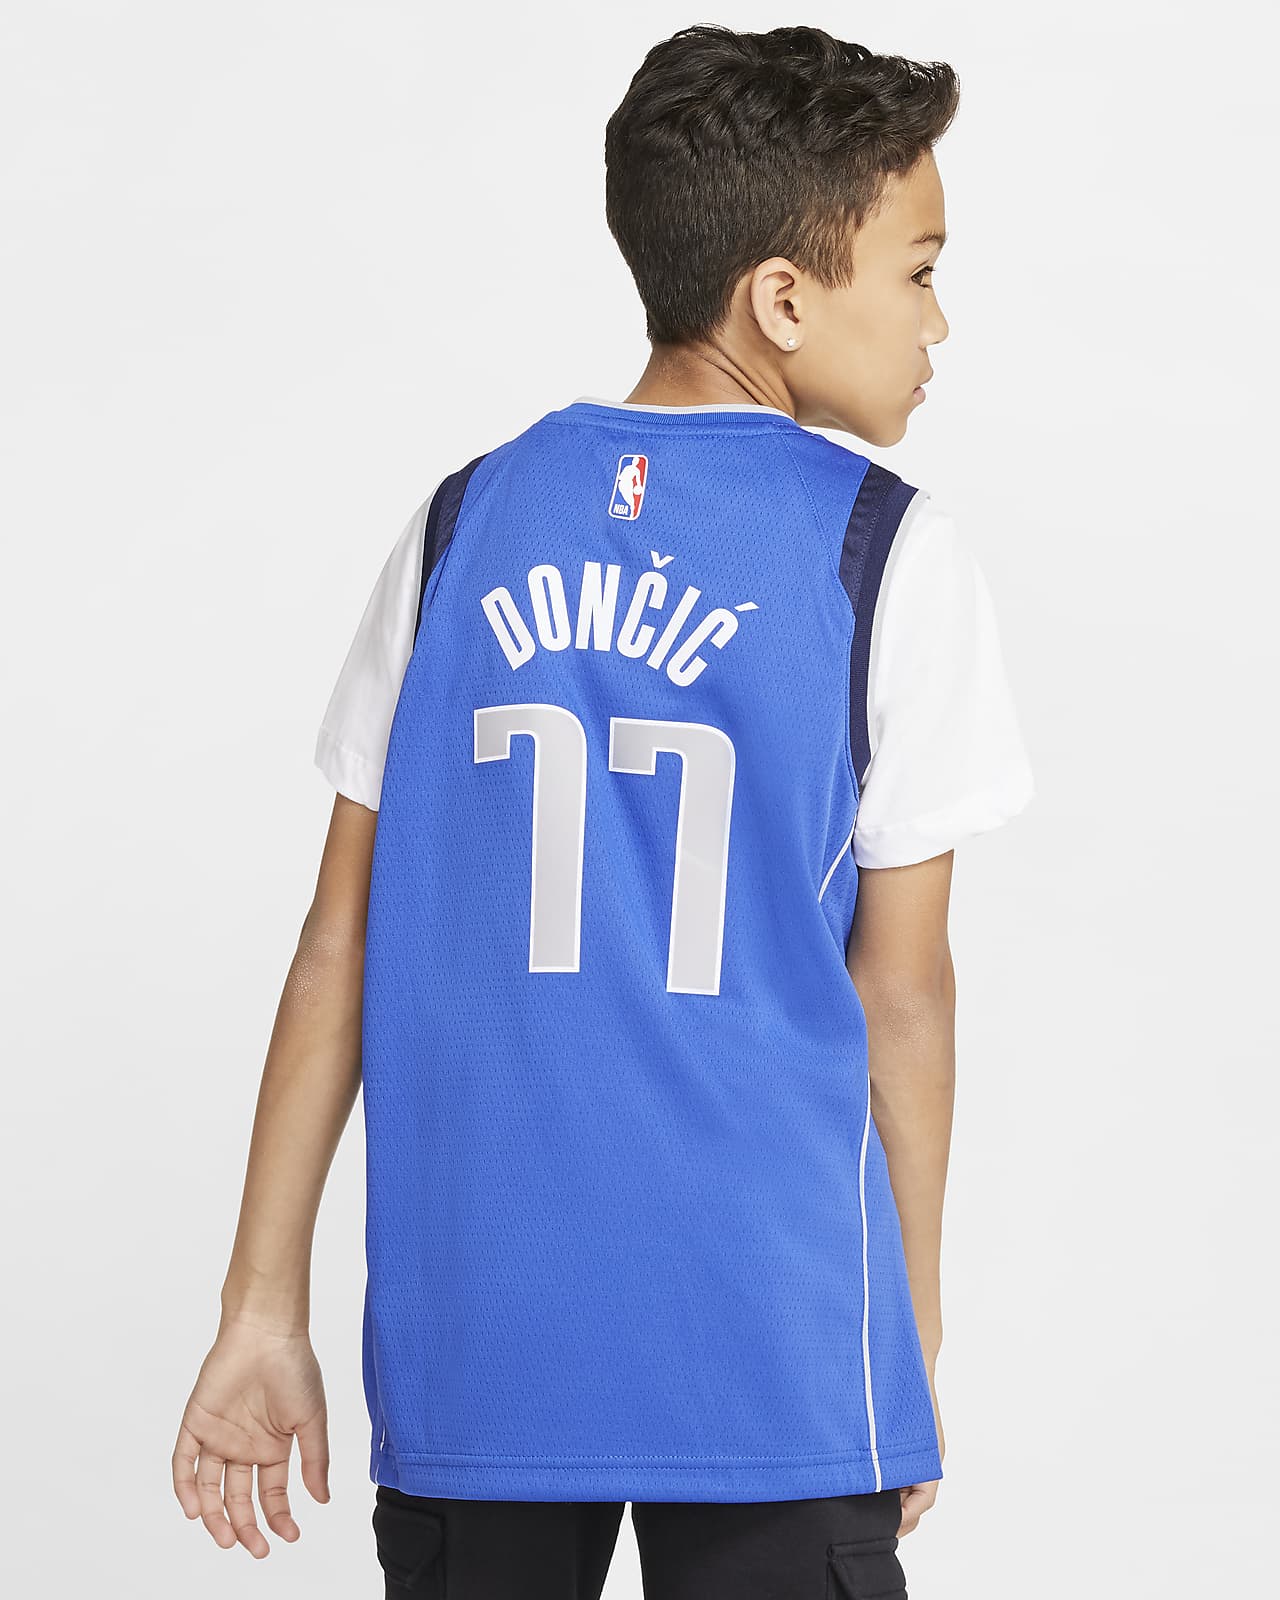 Maillot Nike NBA Swingman Mavericks Icon Edition pour Enfant plus